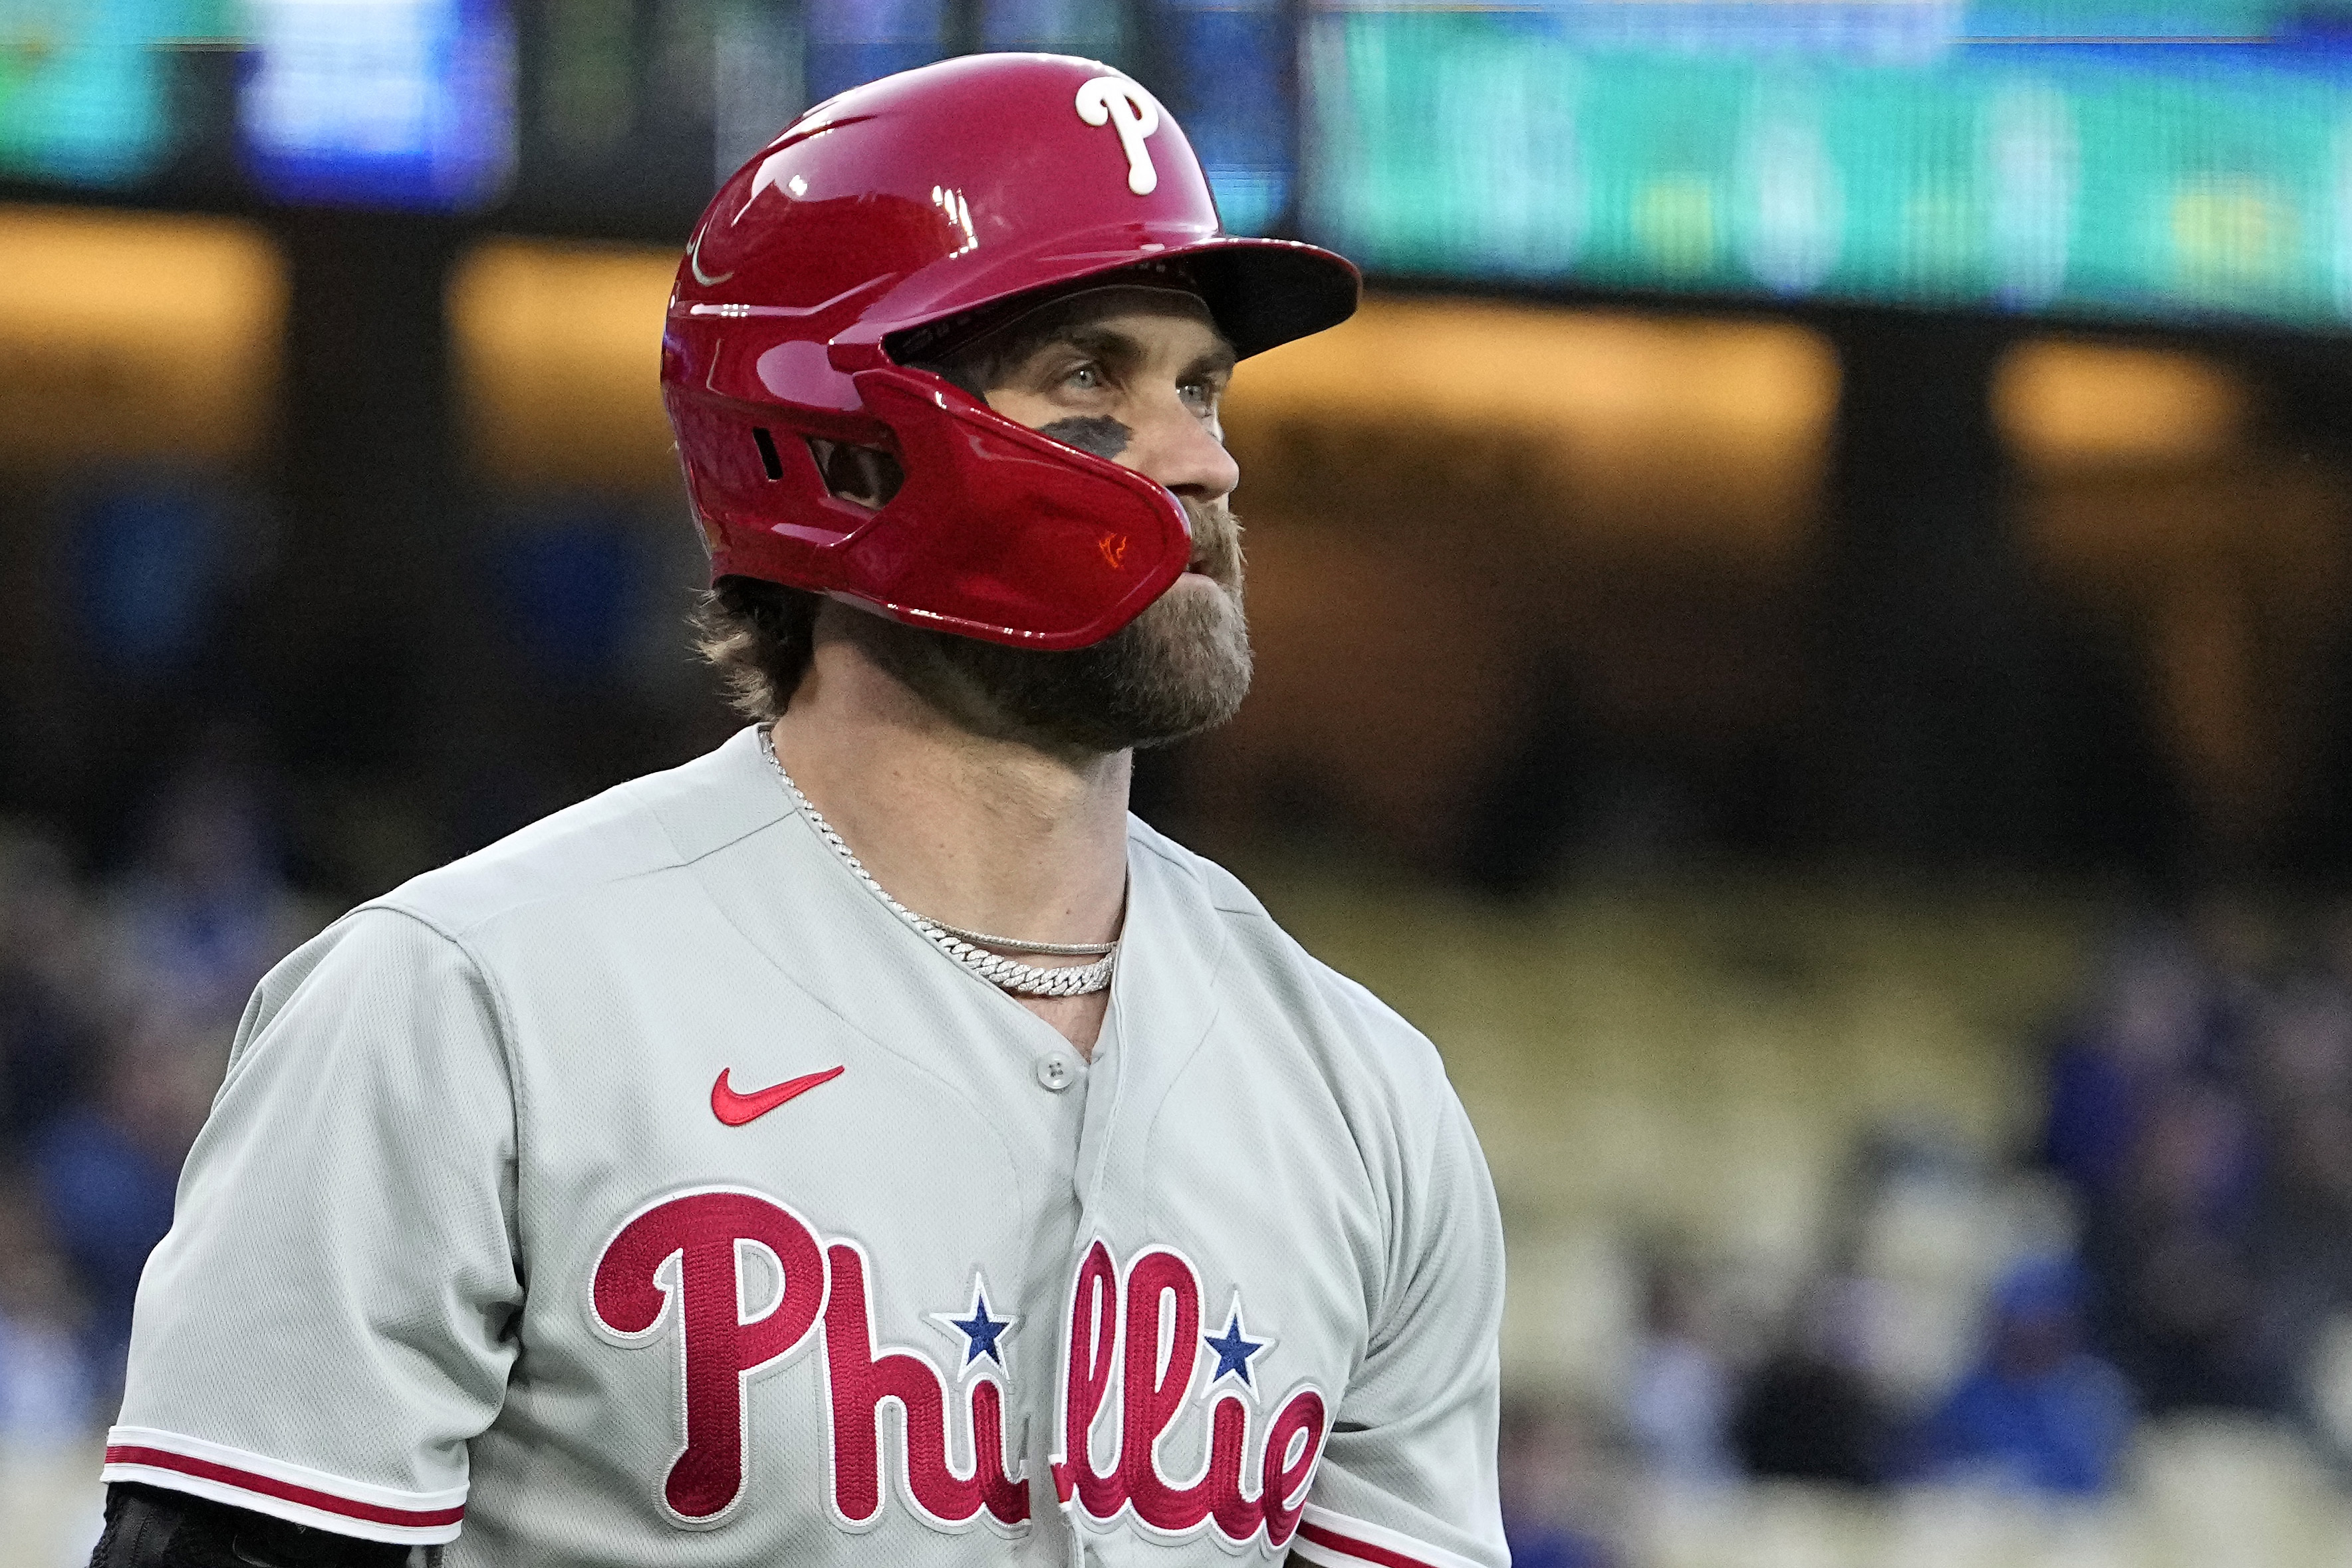 Kyle Schwarber leaves Phillies game vs. Marlins with injury, creating  concern in Philadelphia